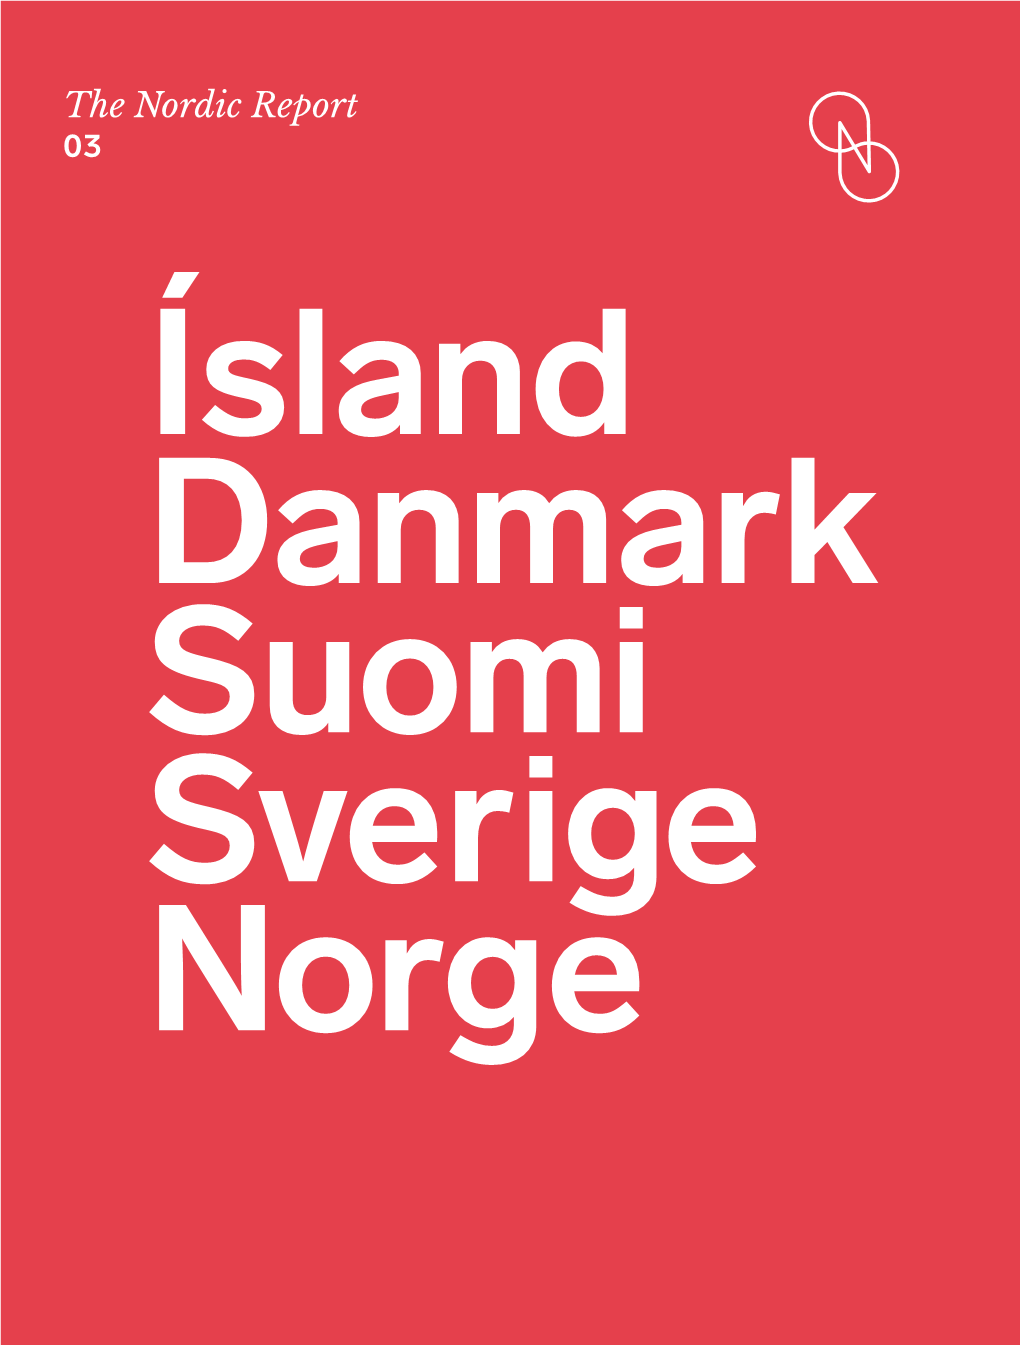 The Nordic Report 03 Ísland Danmark Suomi Sverige Norge 03 the Nordic Report FOREWORD